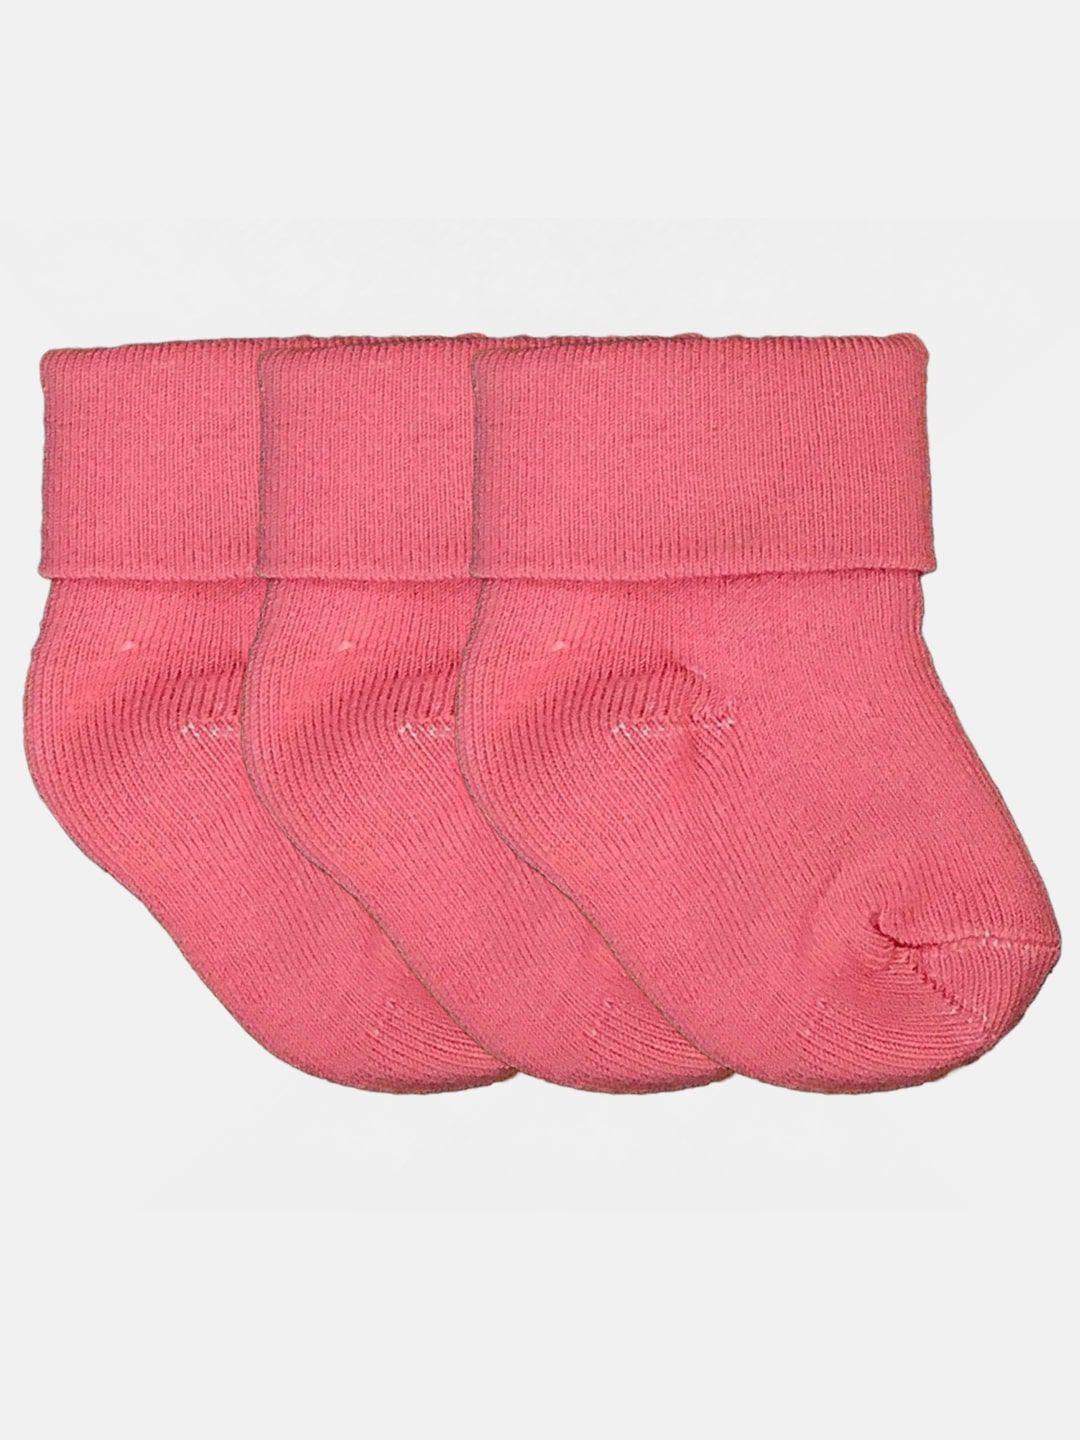 n2s next2skin infant girls pack of 3 patterned ankle-length socks